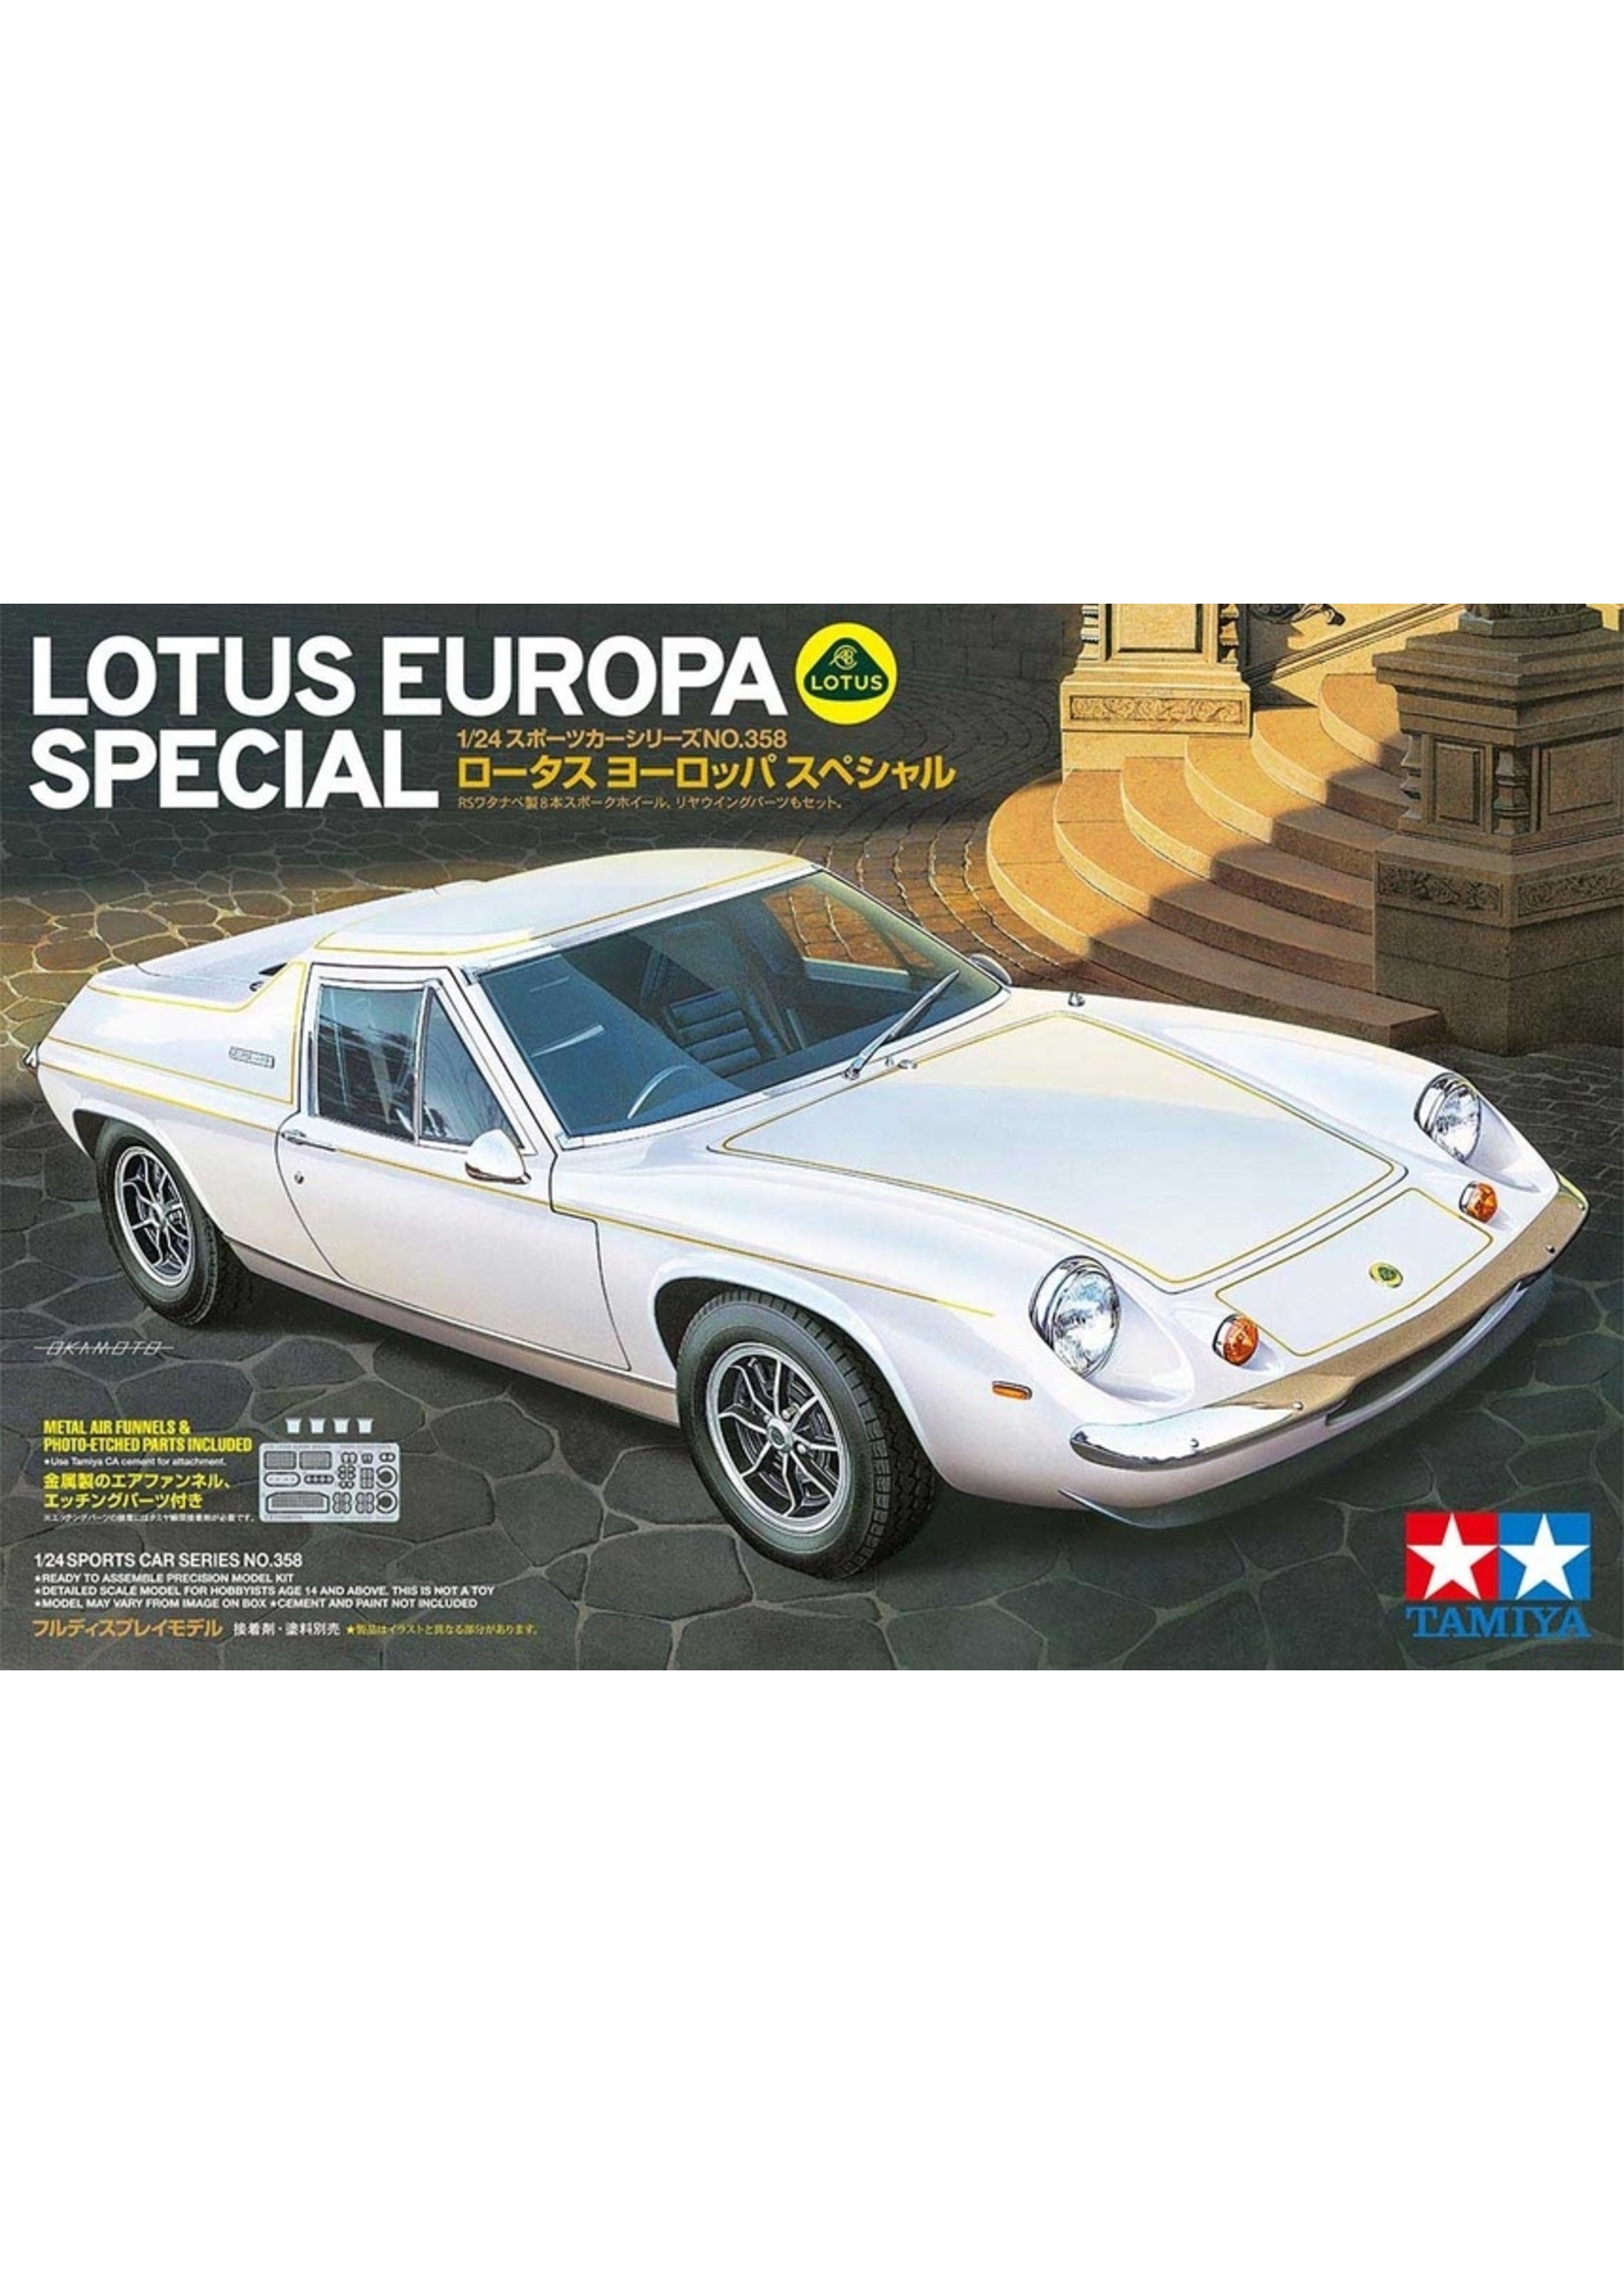 Tamiya Rc Lotus Europa Special / Tamiya USA